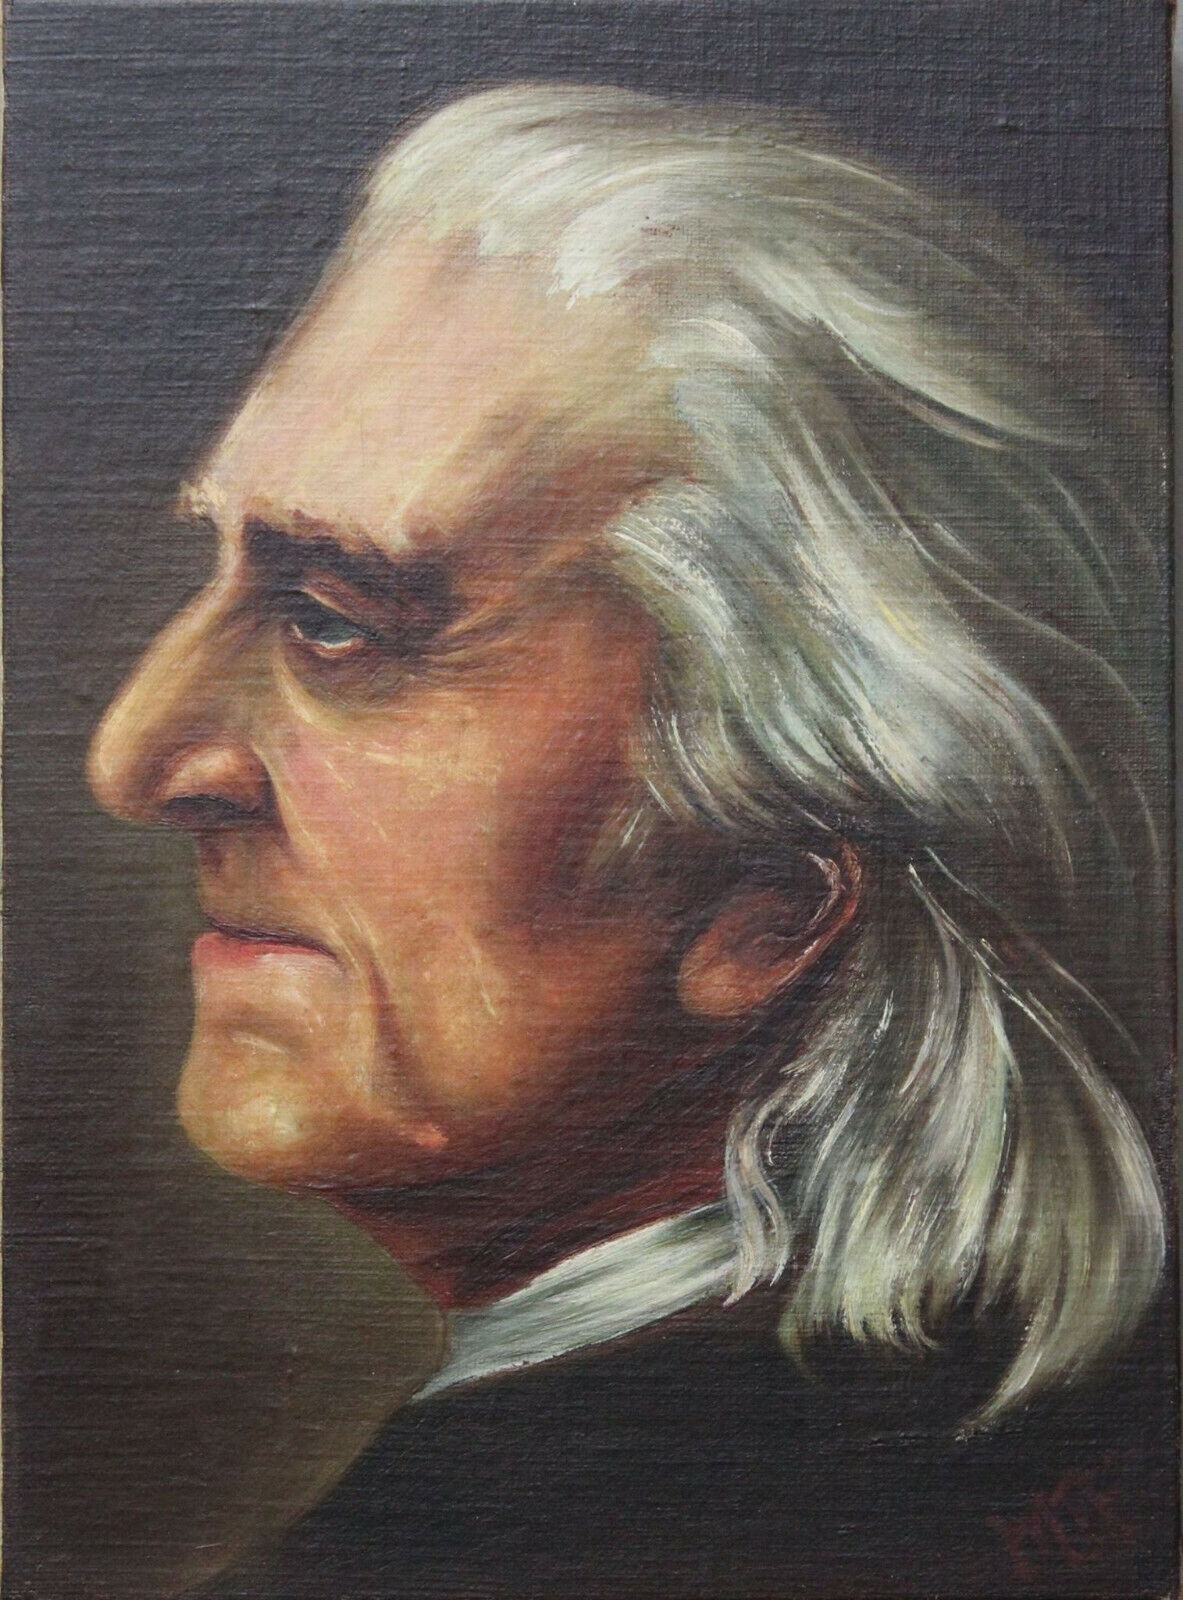 Composer Franz Liszt oil painting on canvas signed c. 1910 after H. Torggler